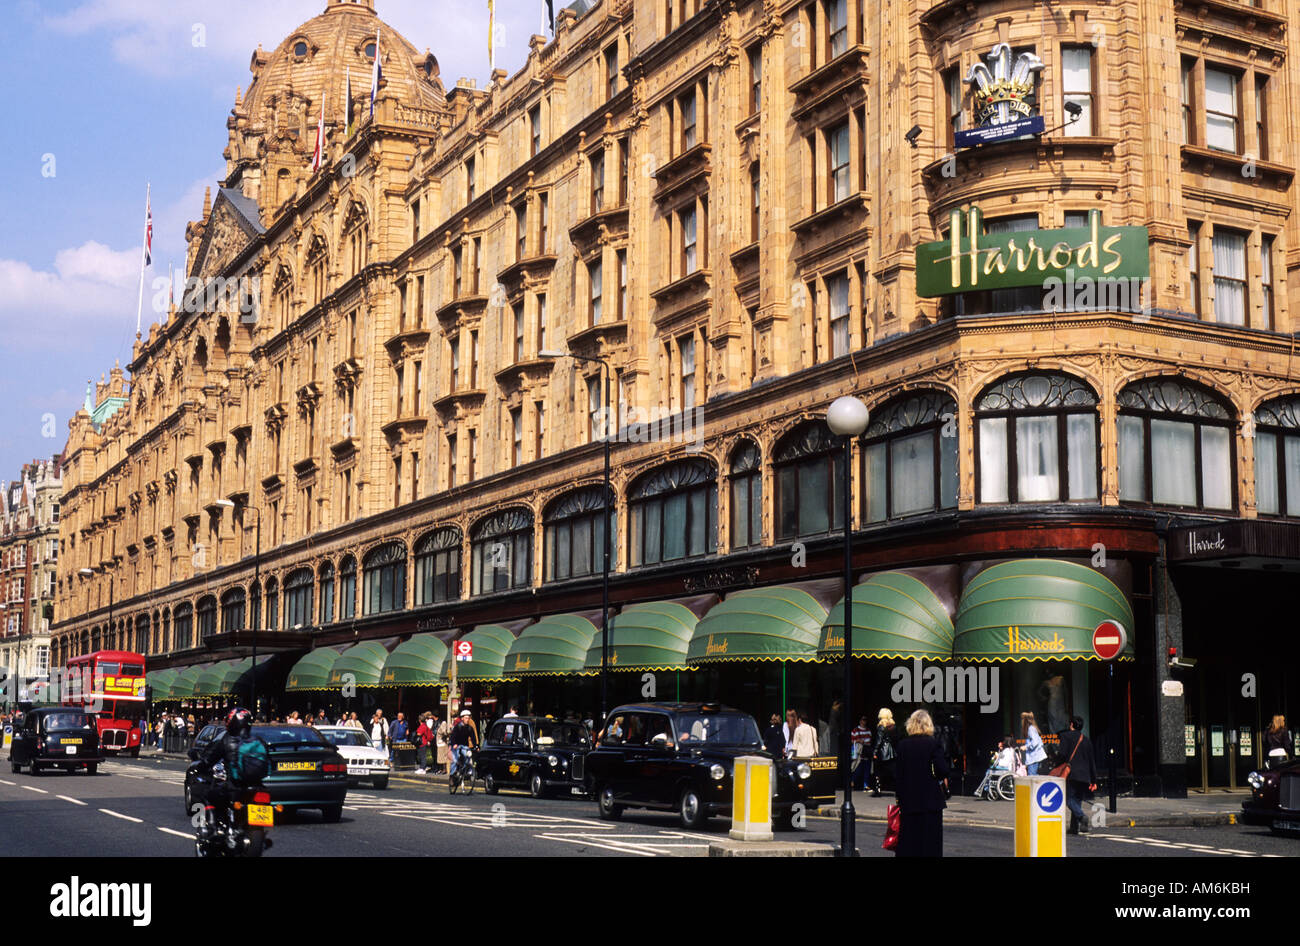 Harrods Knightsbridge London Department Store England UK shop Stock Photo, Royalty Free Image ...